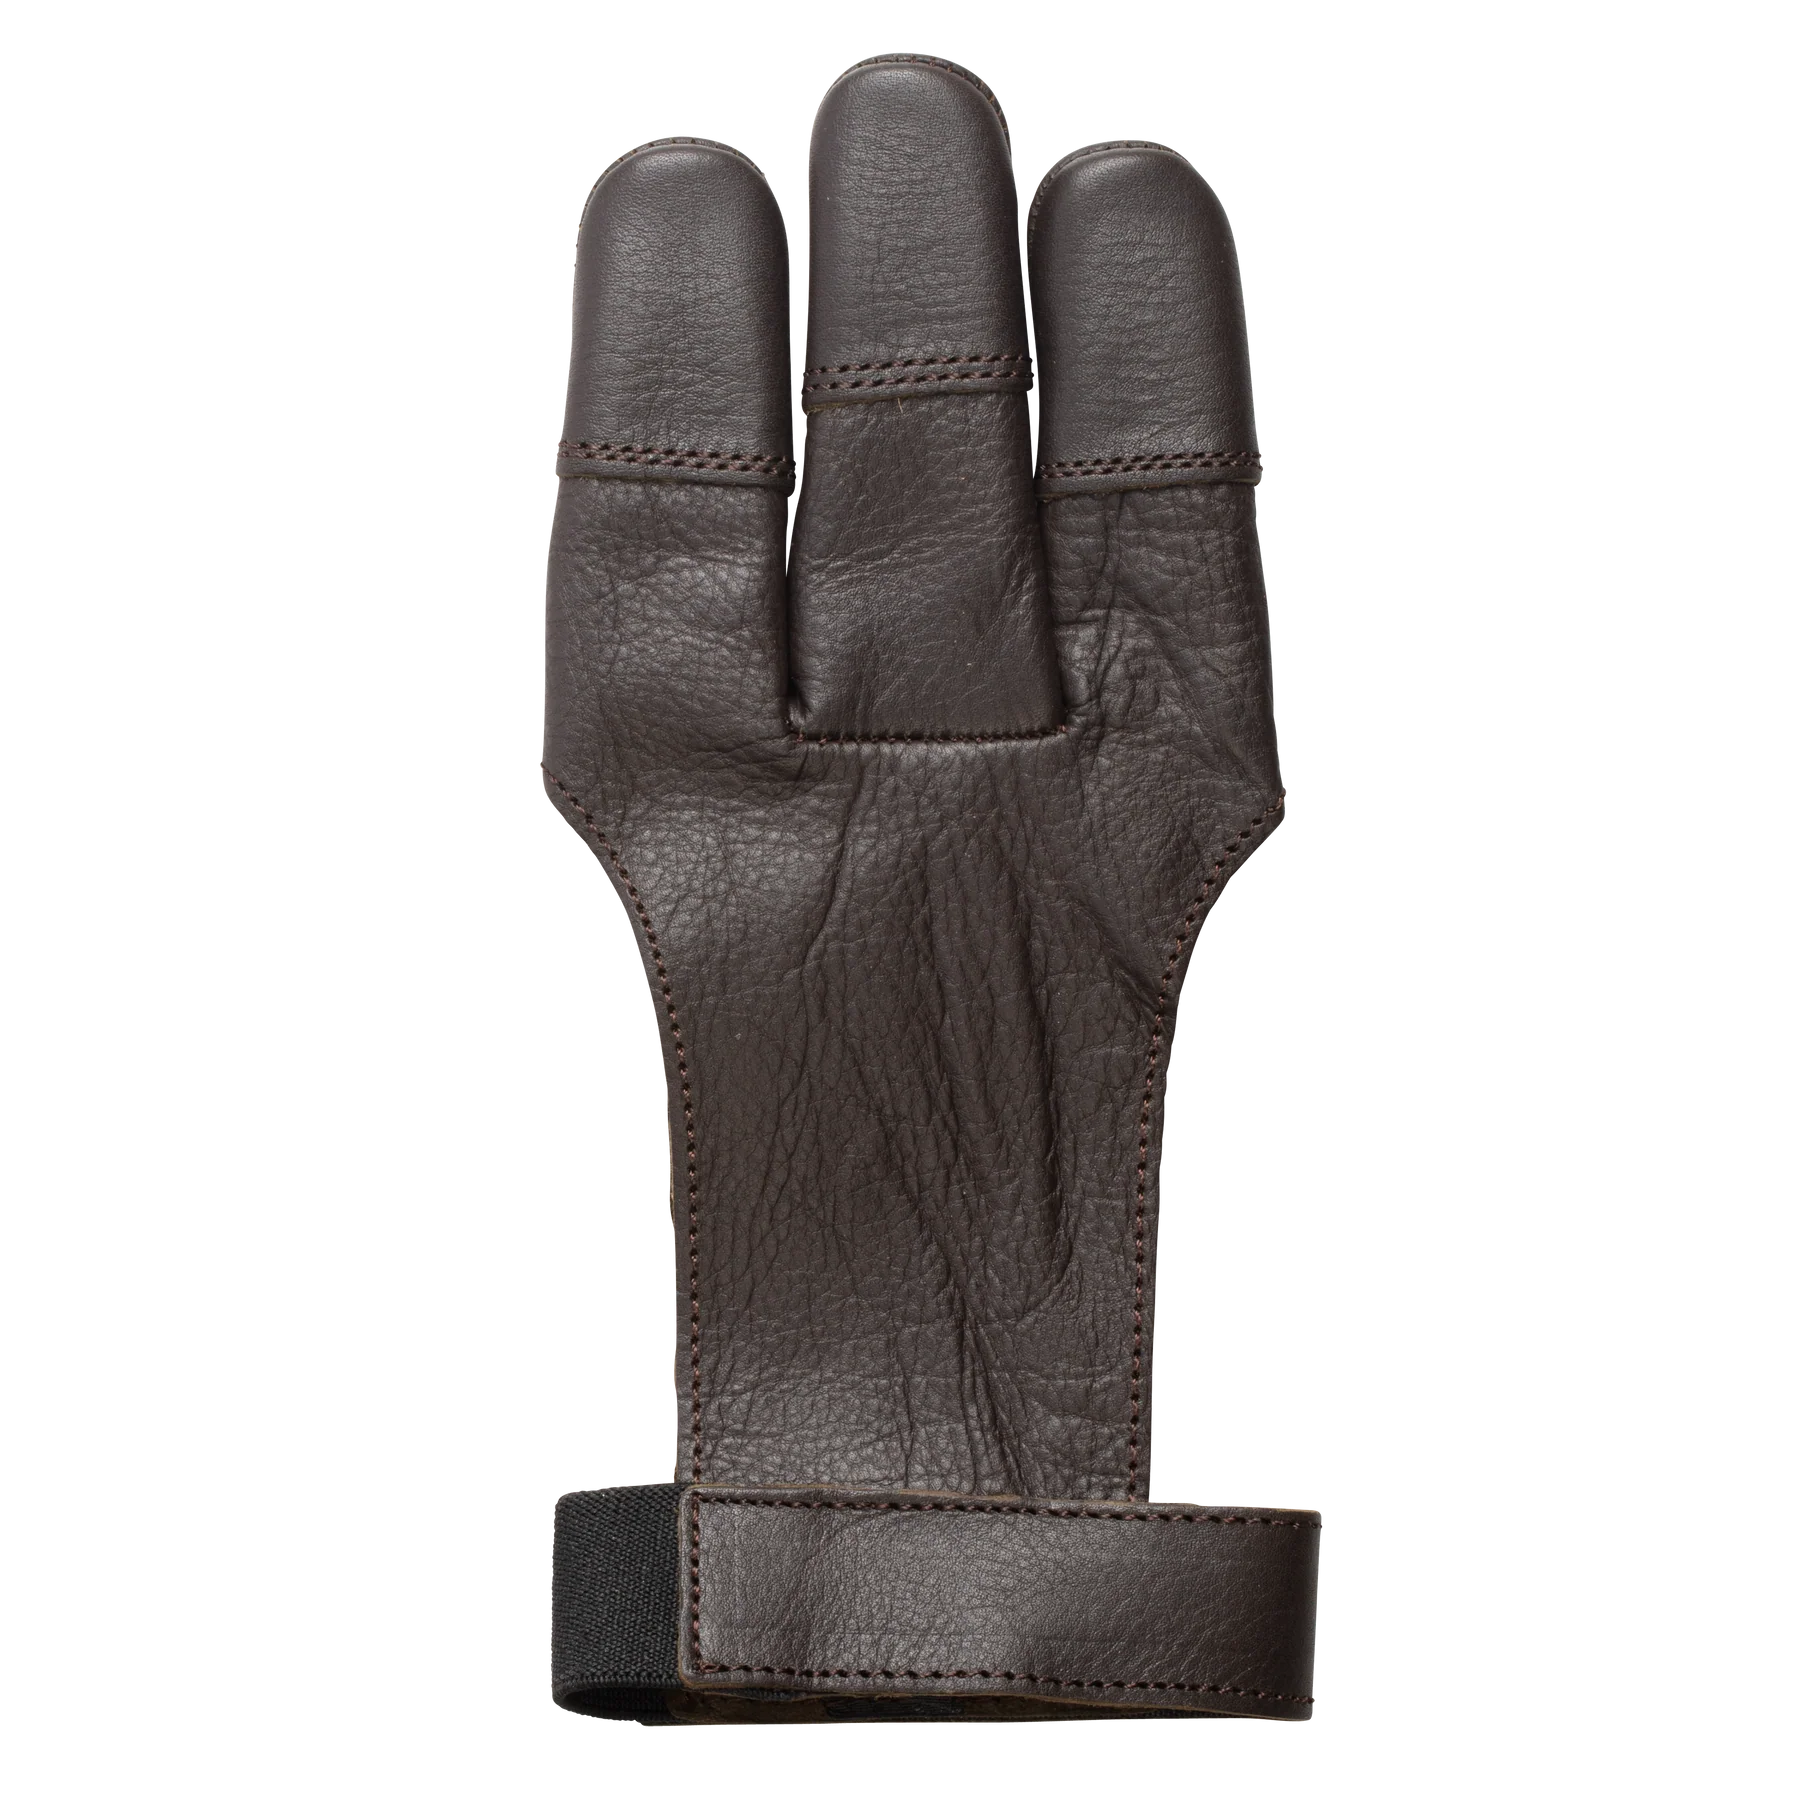 Bear Archery Leather 3 Finger Shooting Glove